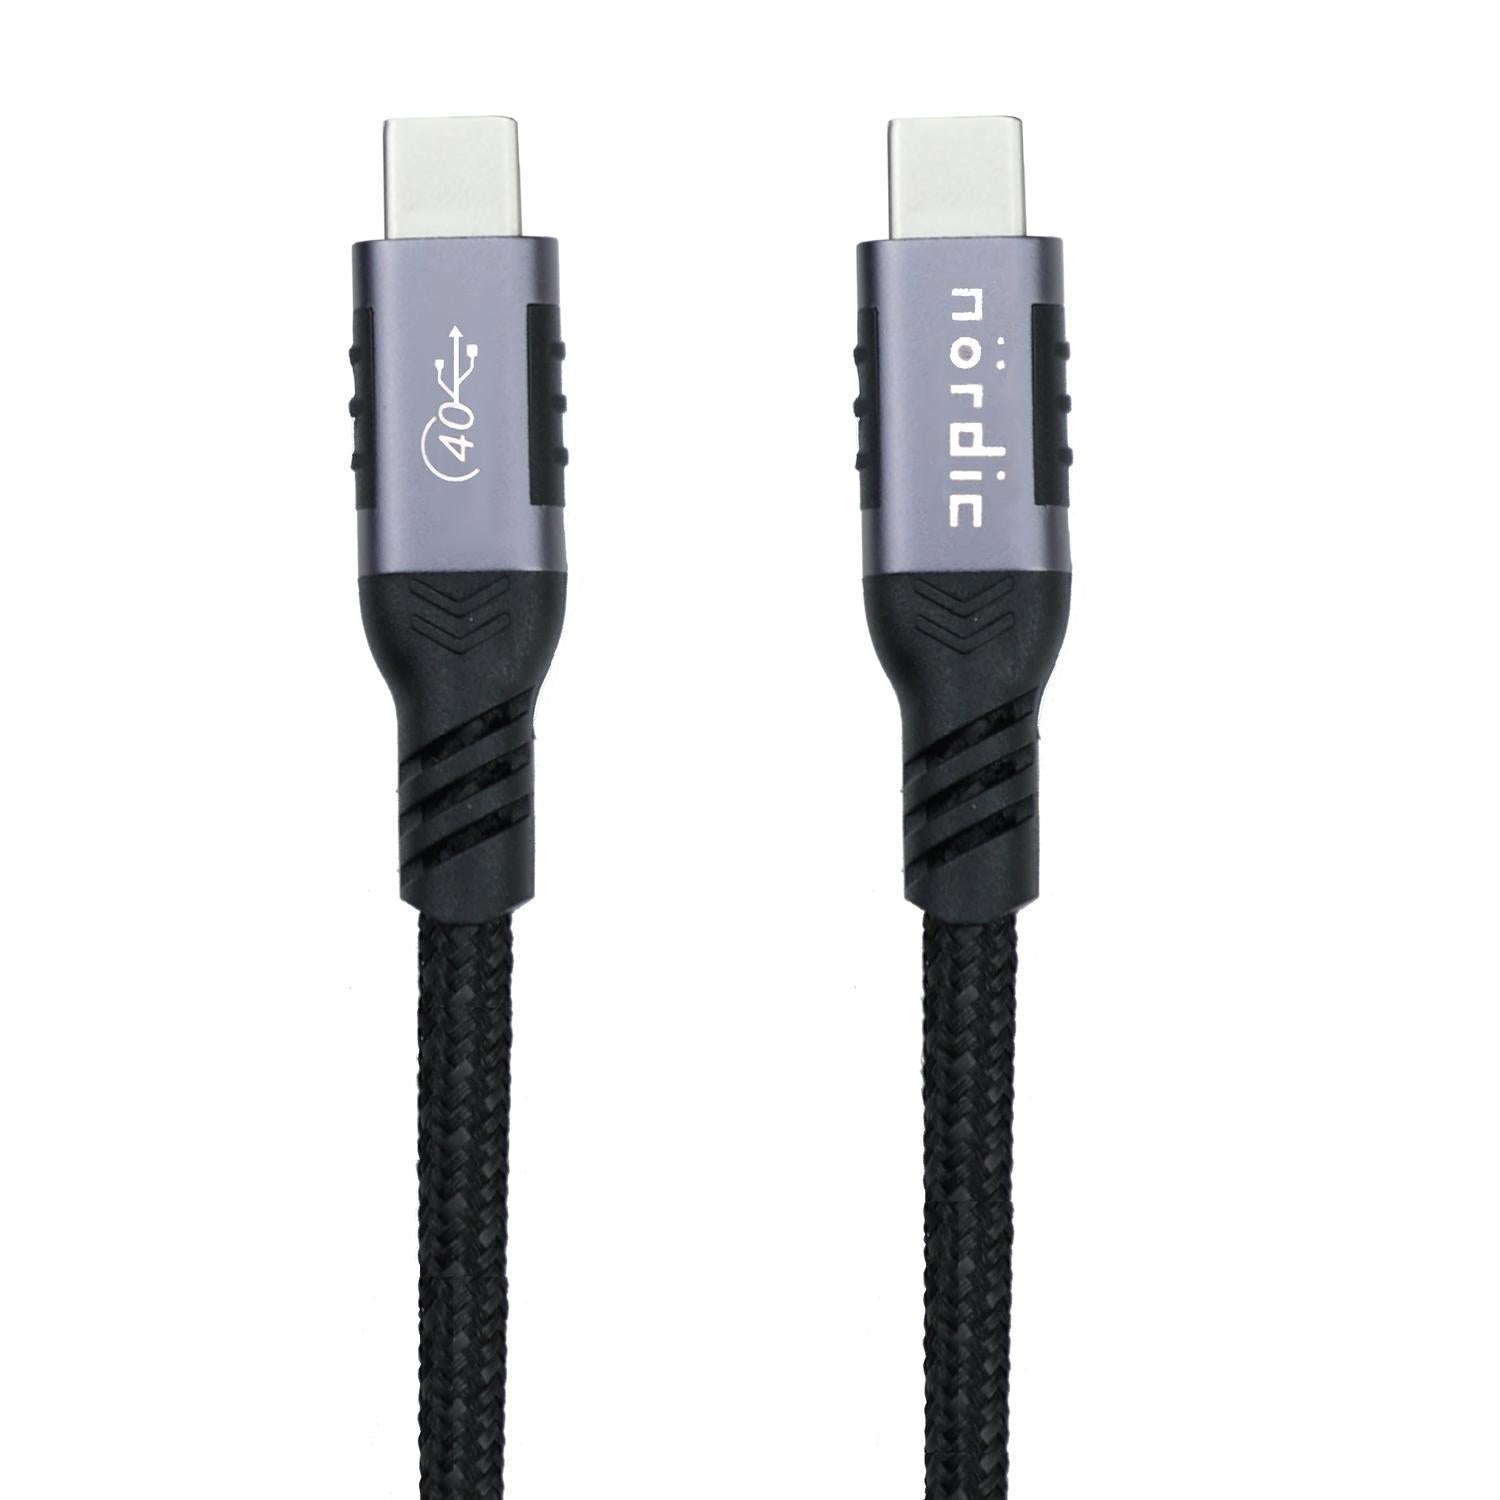 NÖRDIC USB4-kabel 1,5 m 40 Gbps data 8K video PD 100W kompatibel med Thunderbolt 3